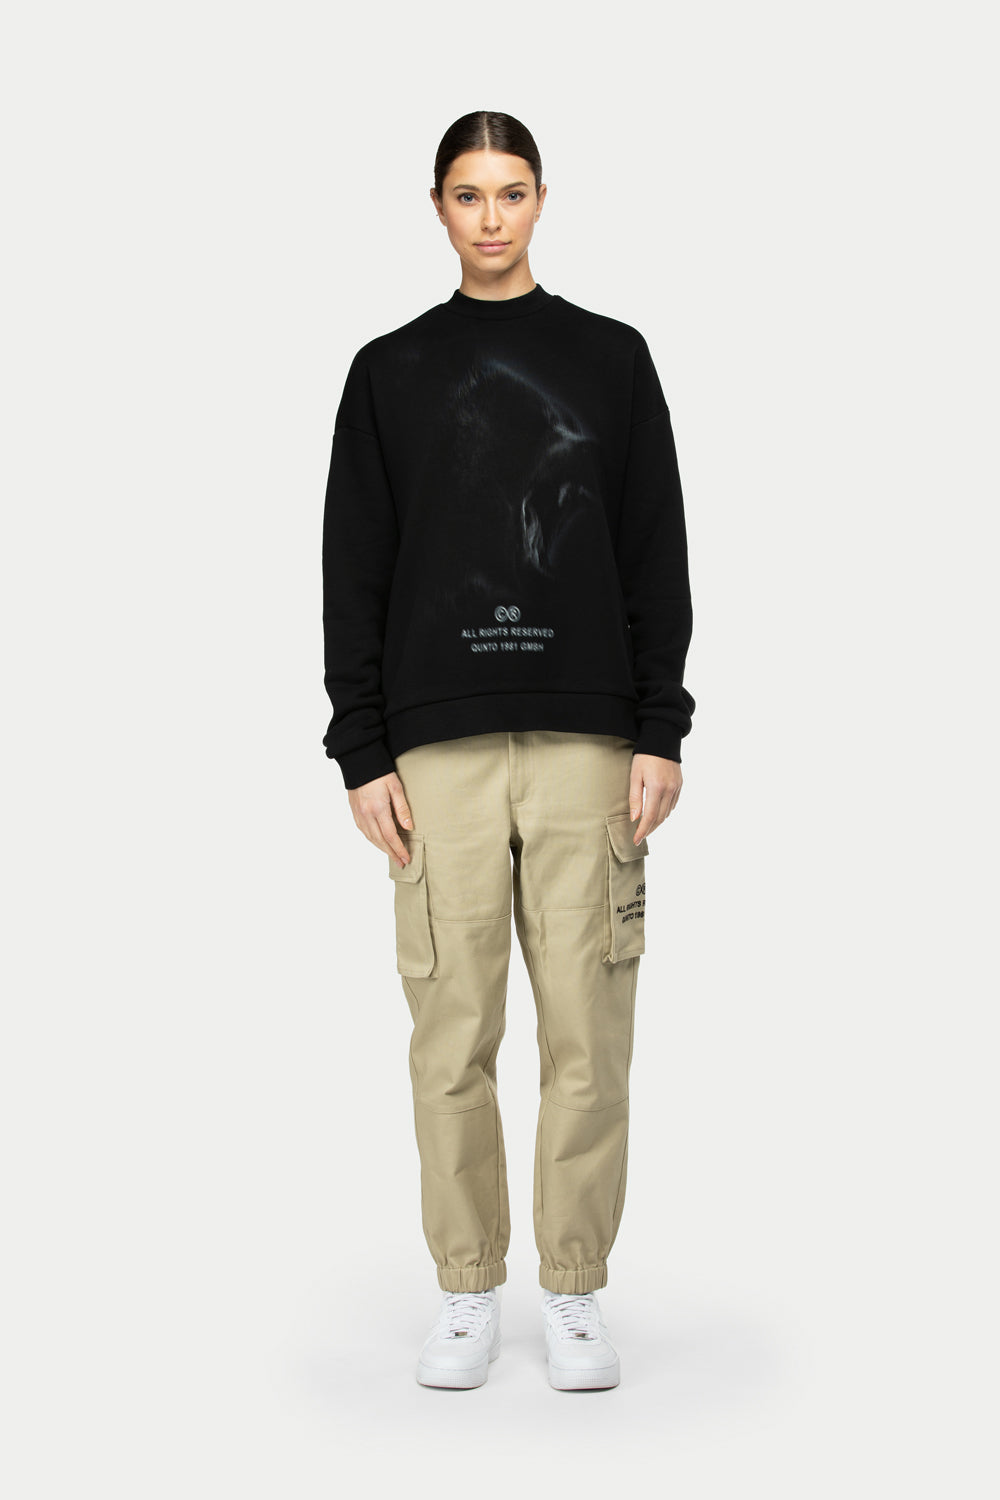 Bear Blurred Sweatshirt Black